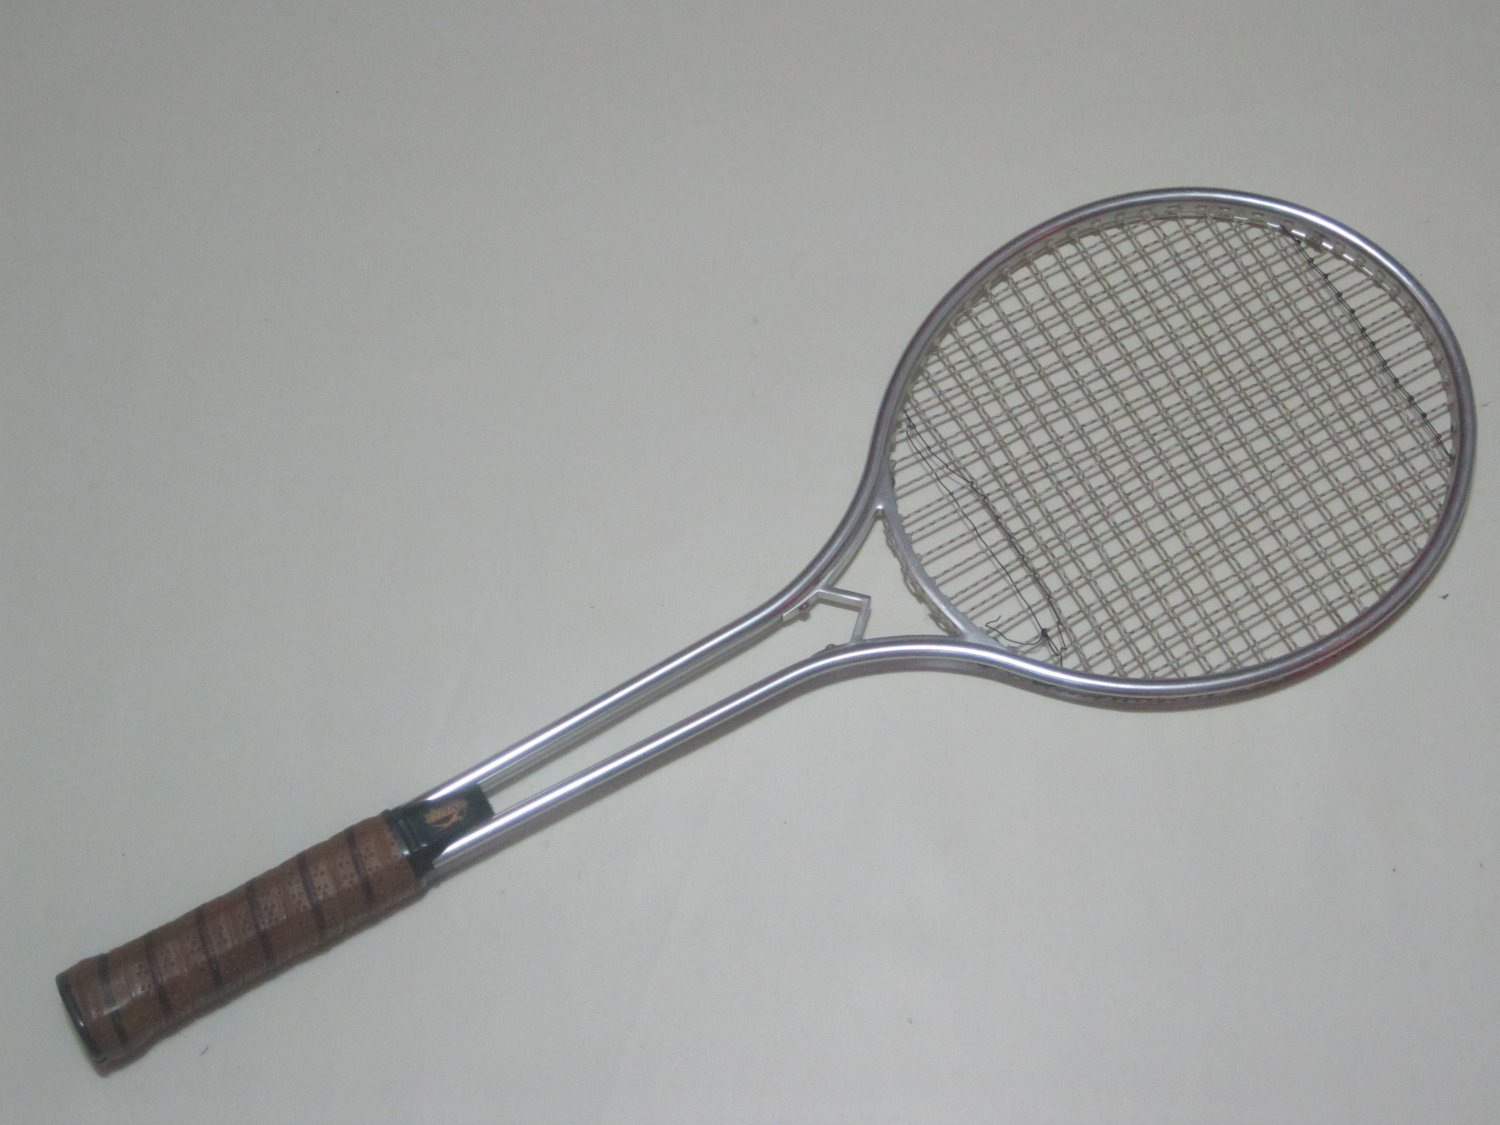 Slazenger Alluminum Tennis Racquet (SLA10)